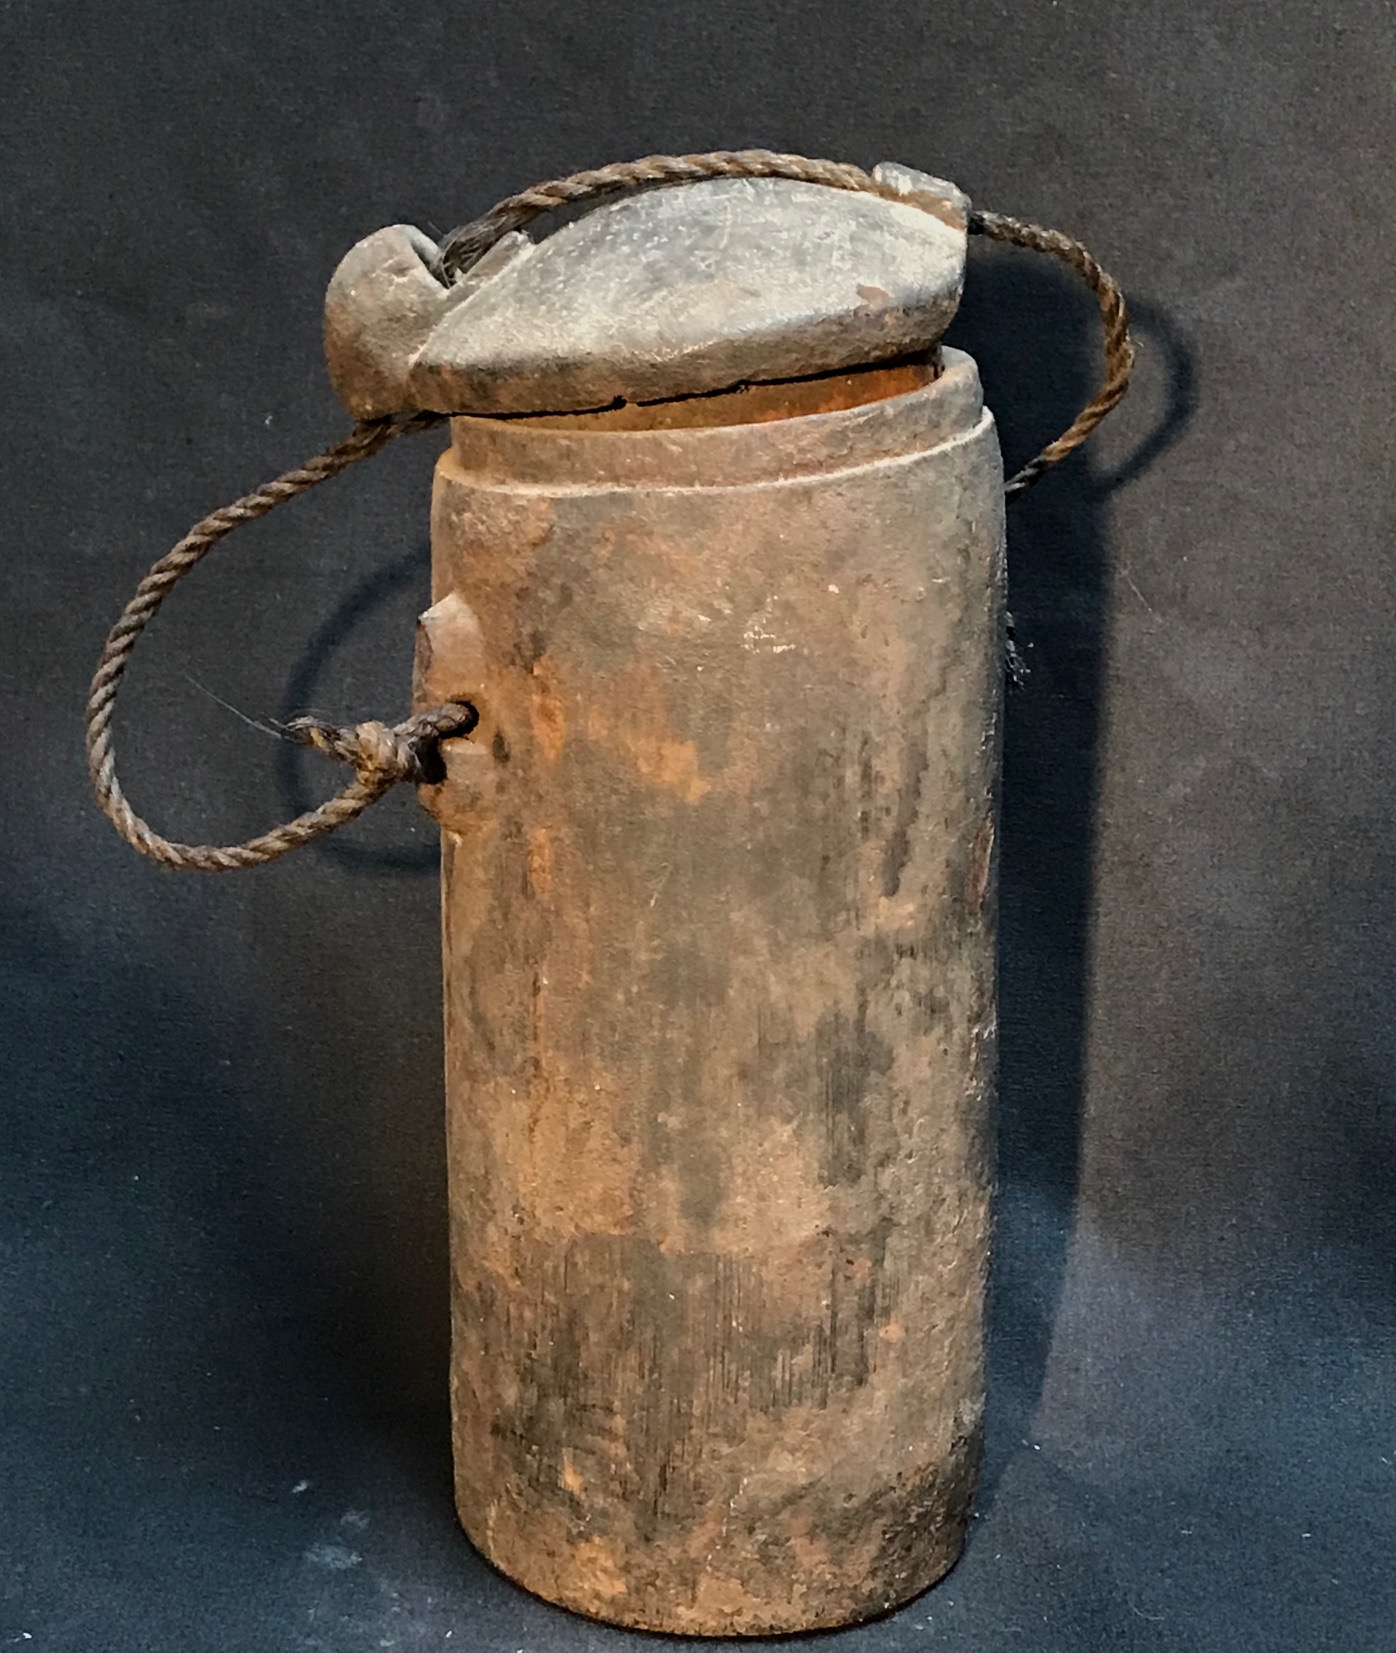 Shaman's medicine jar, for healing herbs and substances. Sumba Island, Indonesia, early 20th c. bamboo, wood, twine, 12" x 4 1/2", $